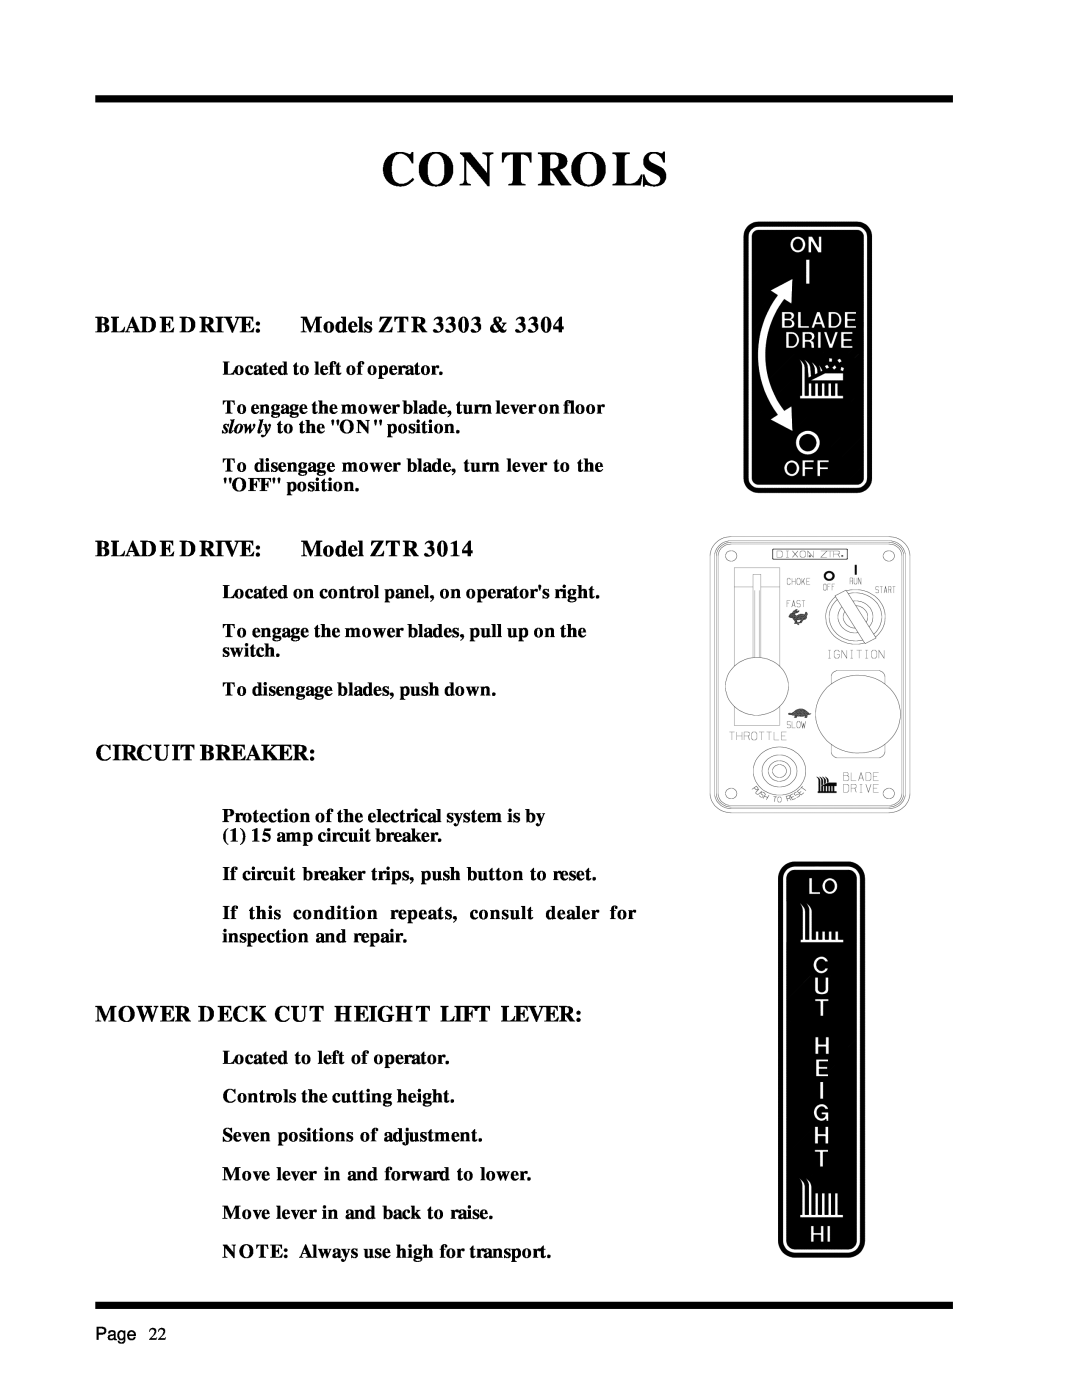 Dixon ZTR 2301 Controls, BLADE DRIVE Models ZTR, BLADE DRIVE Model ZTR, Circuit Breaker, Mower Deck Cut Height Lift Lever 